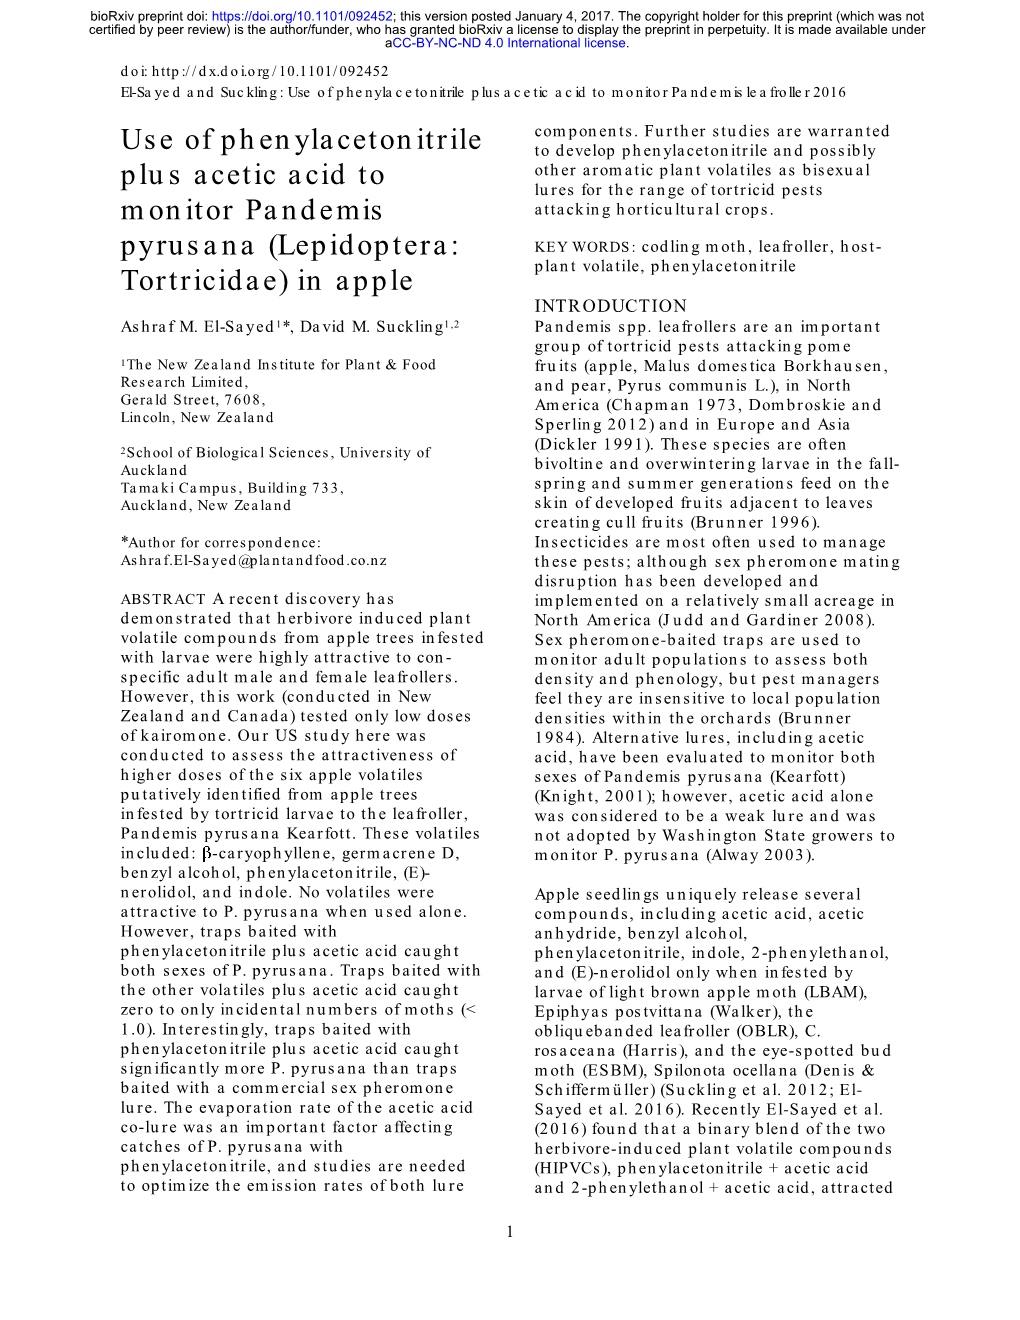 Use of Phenylacetonitrile Plus Acetic Acid to Monitor Pandemis Pyrusana